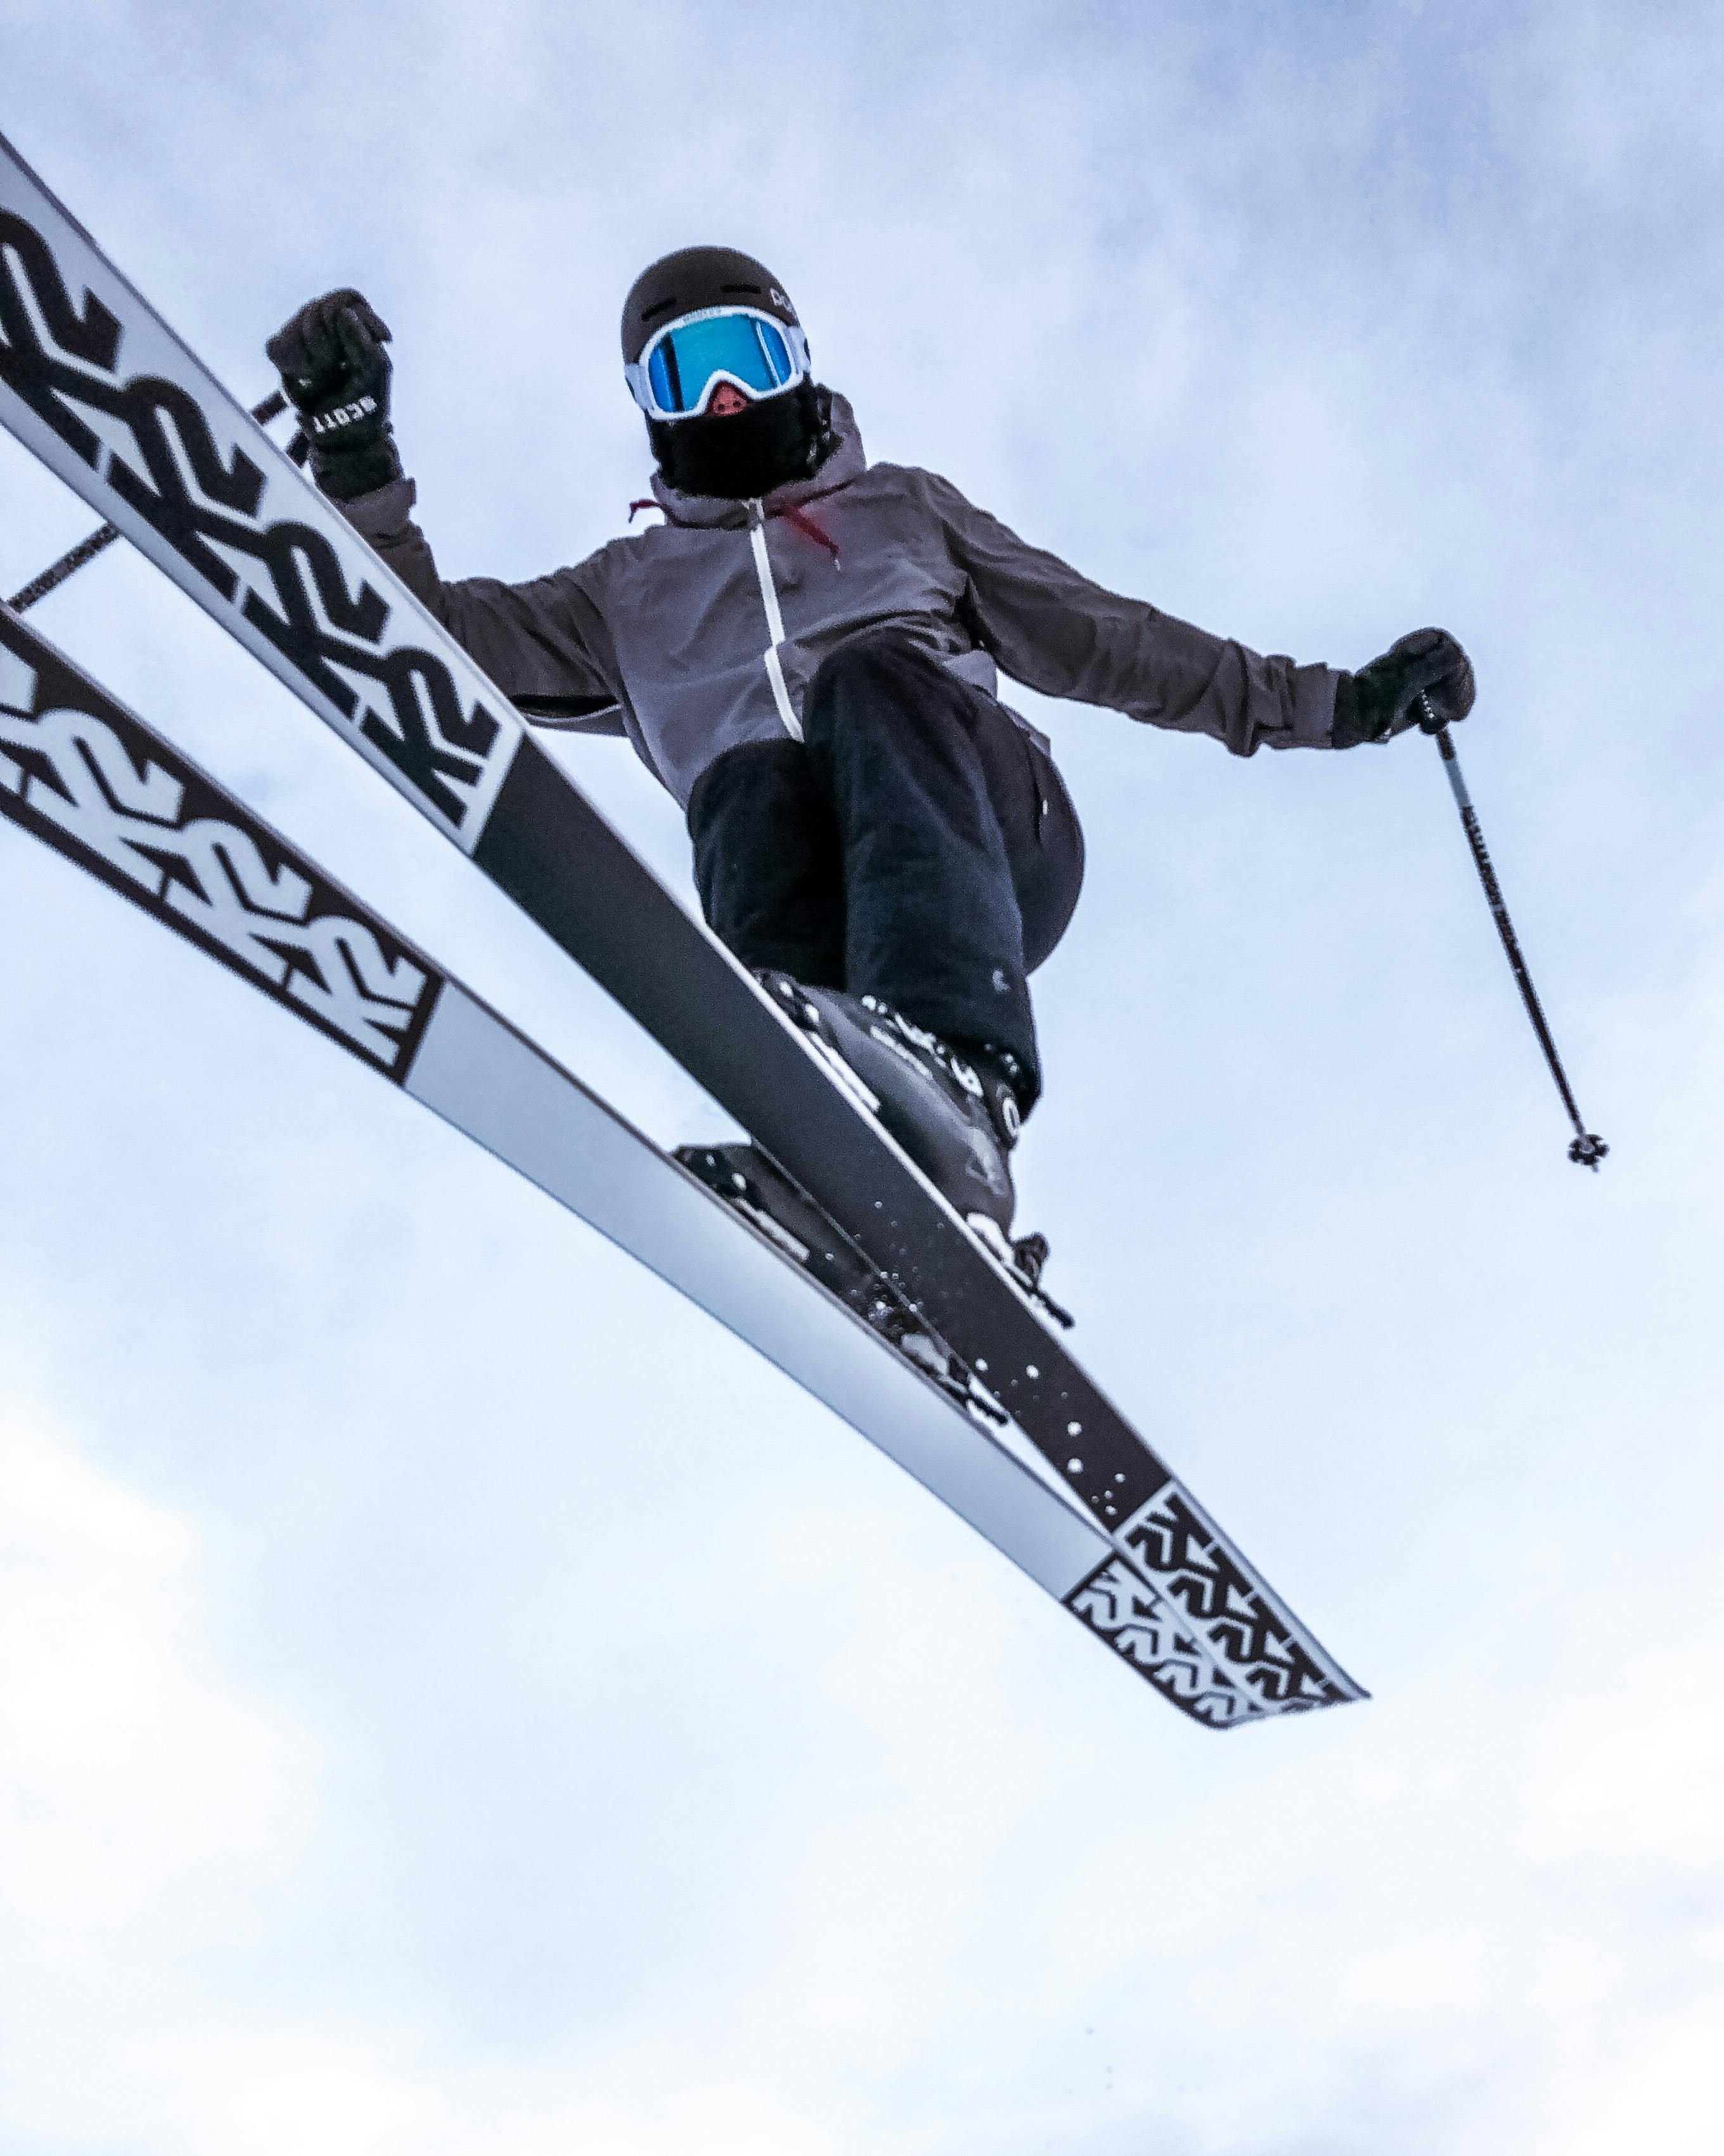 flying skier in jump against blue sky